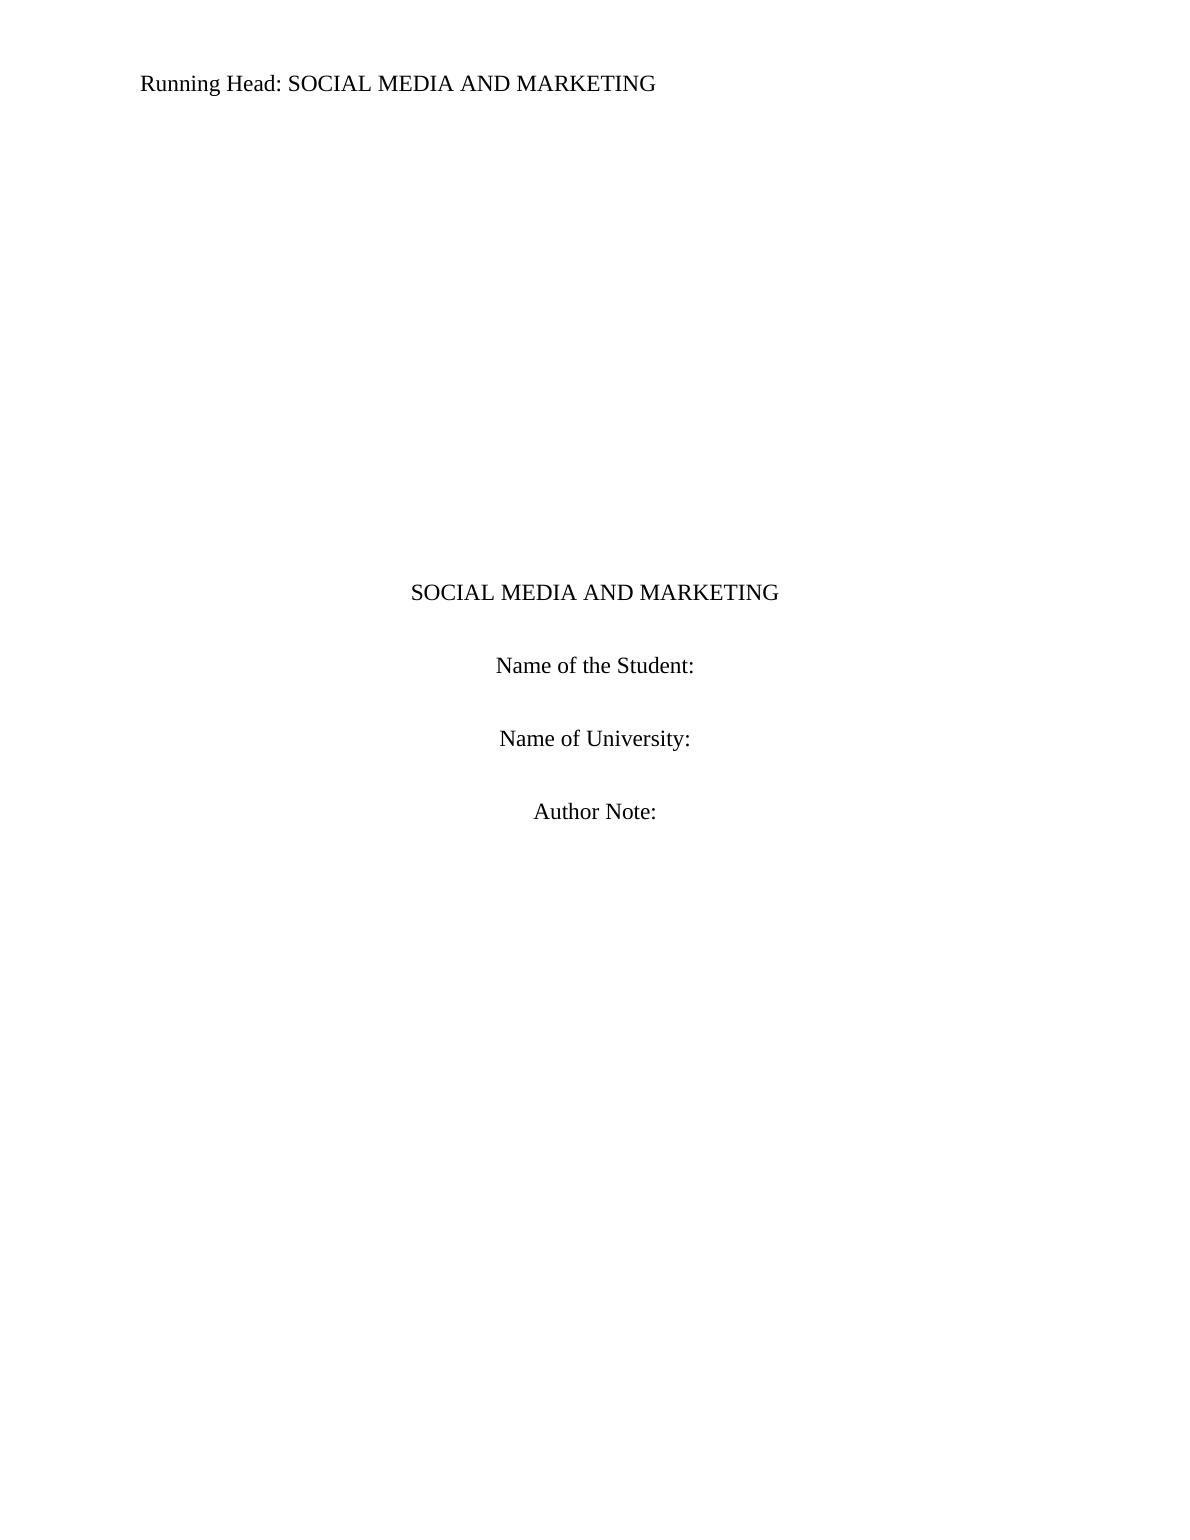 Social Media and Marketing in PDF_1